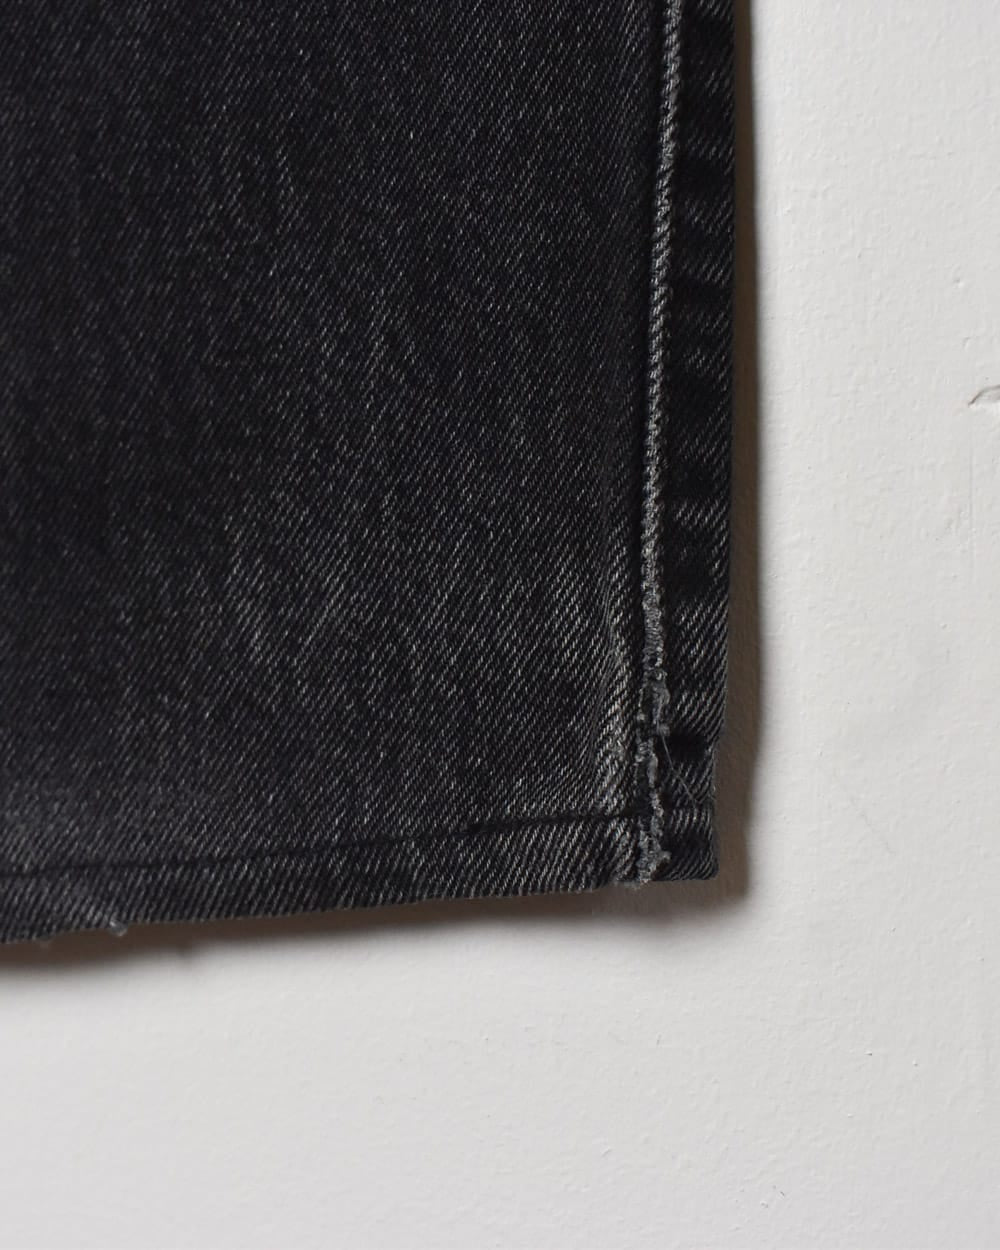 Black Levi's 501 Jeans - W34 L25